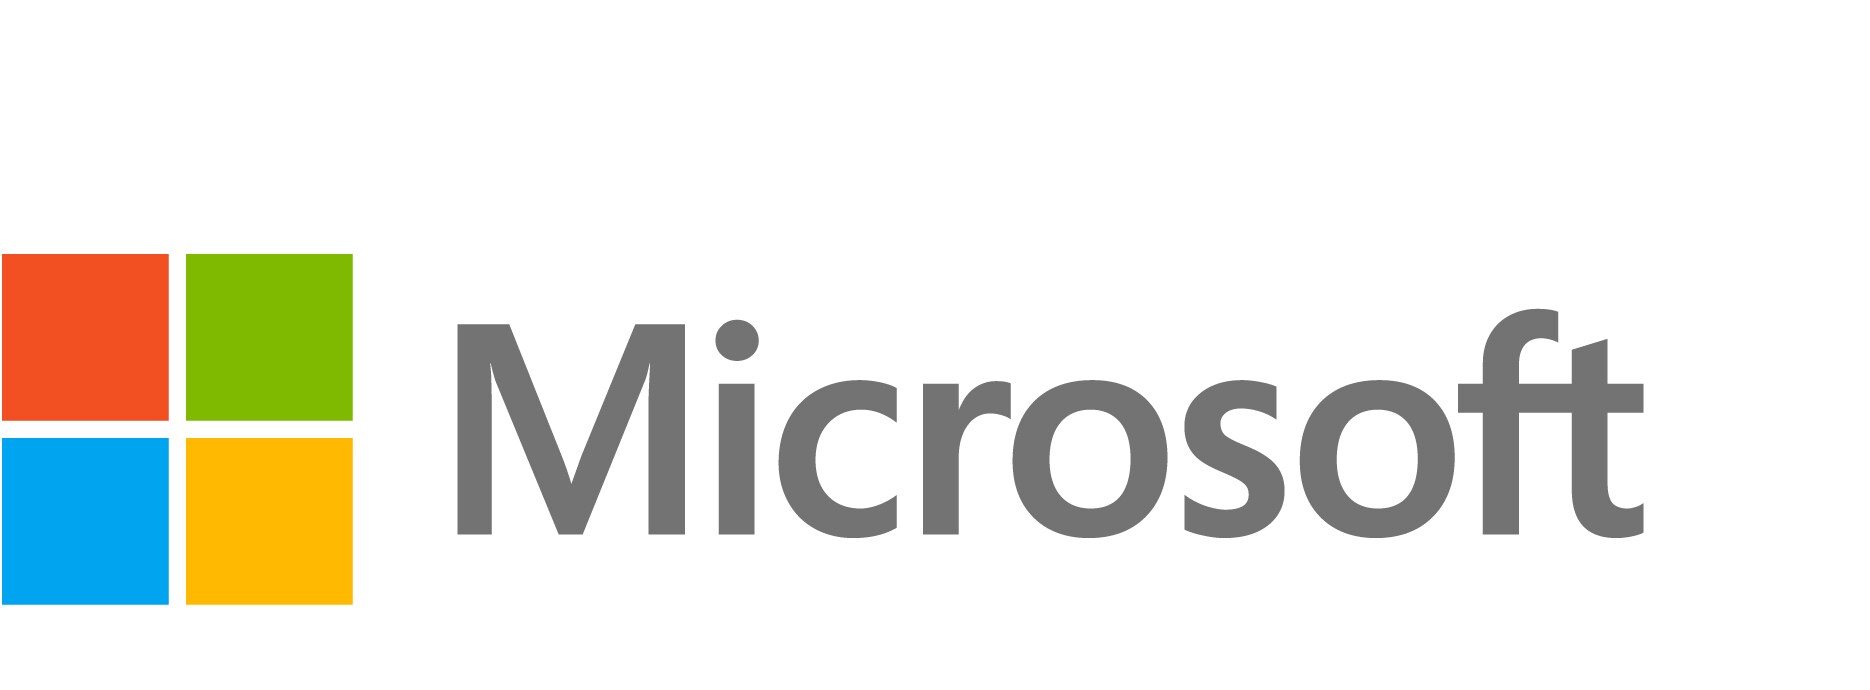 Microsoft Visual Studio Enterprise with MSDN - software assurance - 1 license